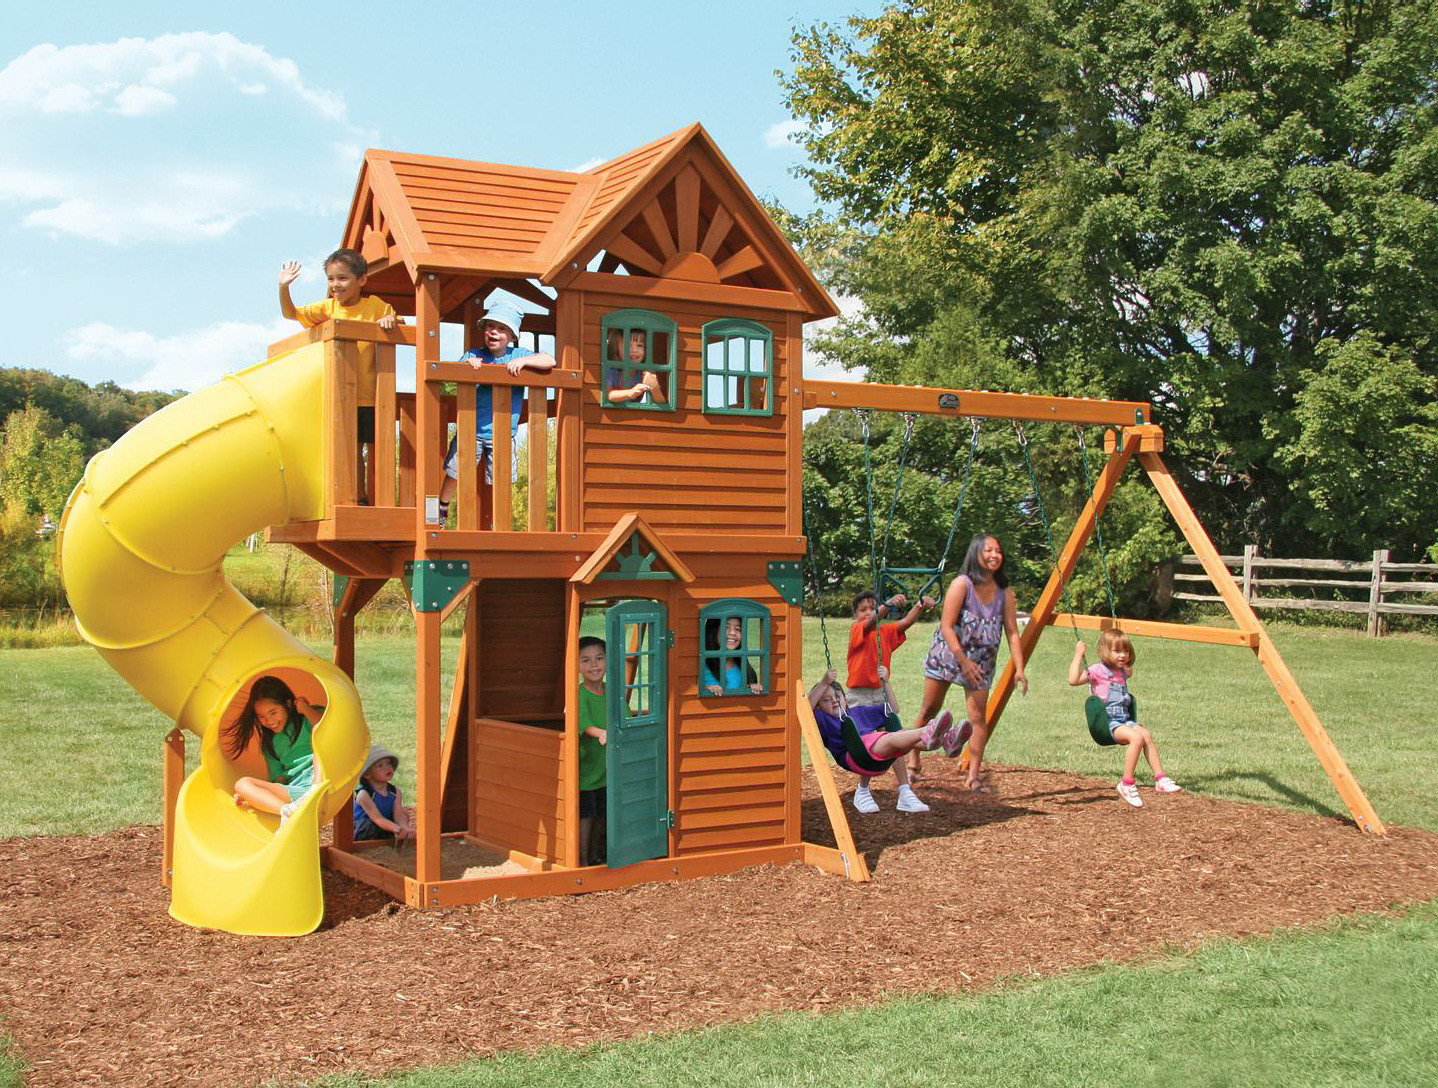 Backyard Children'S Play Equipment
 New Giant Outdoor Wood Playground Play Set Wooden Kid s